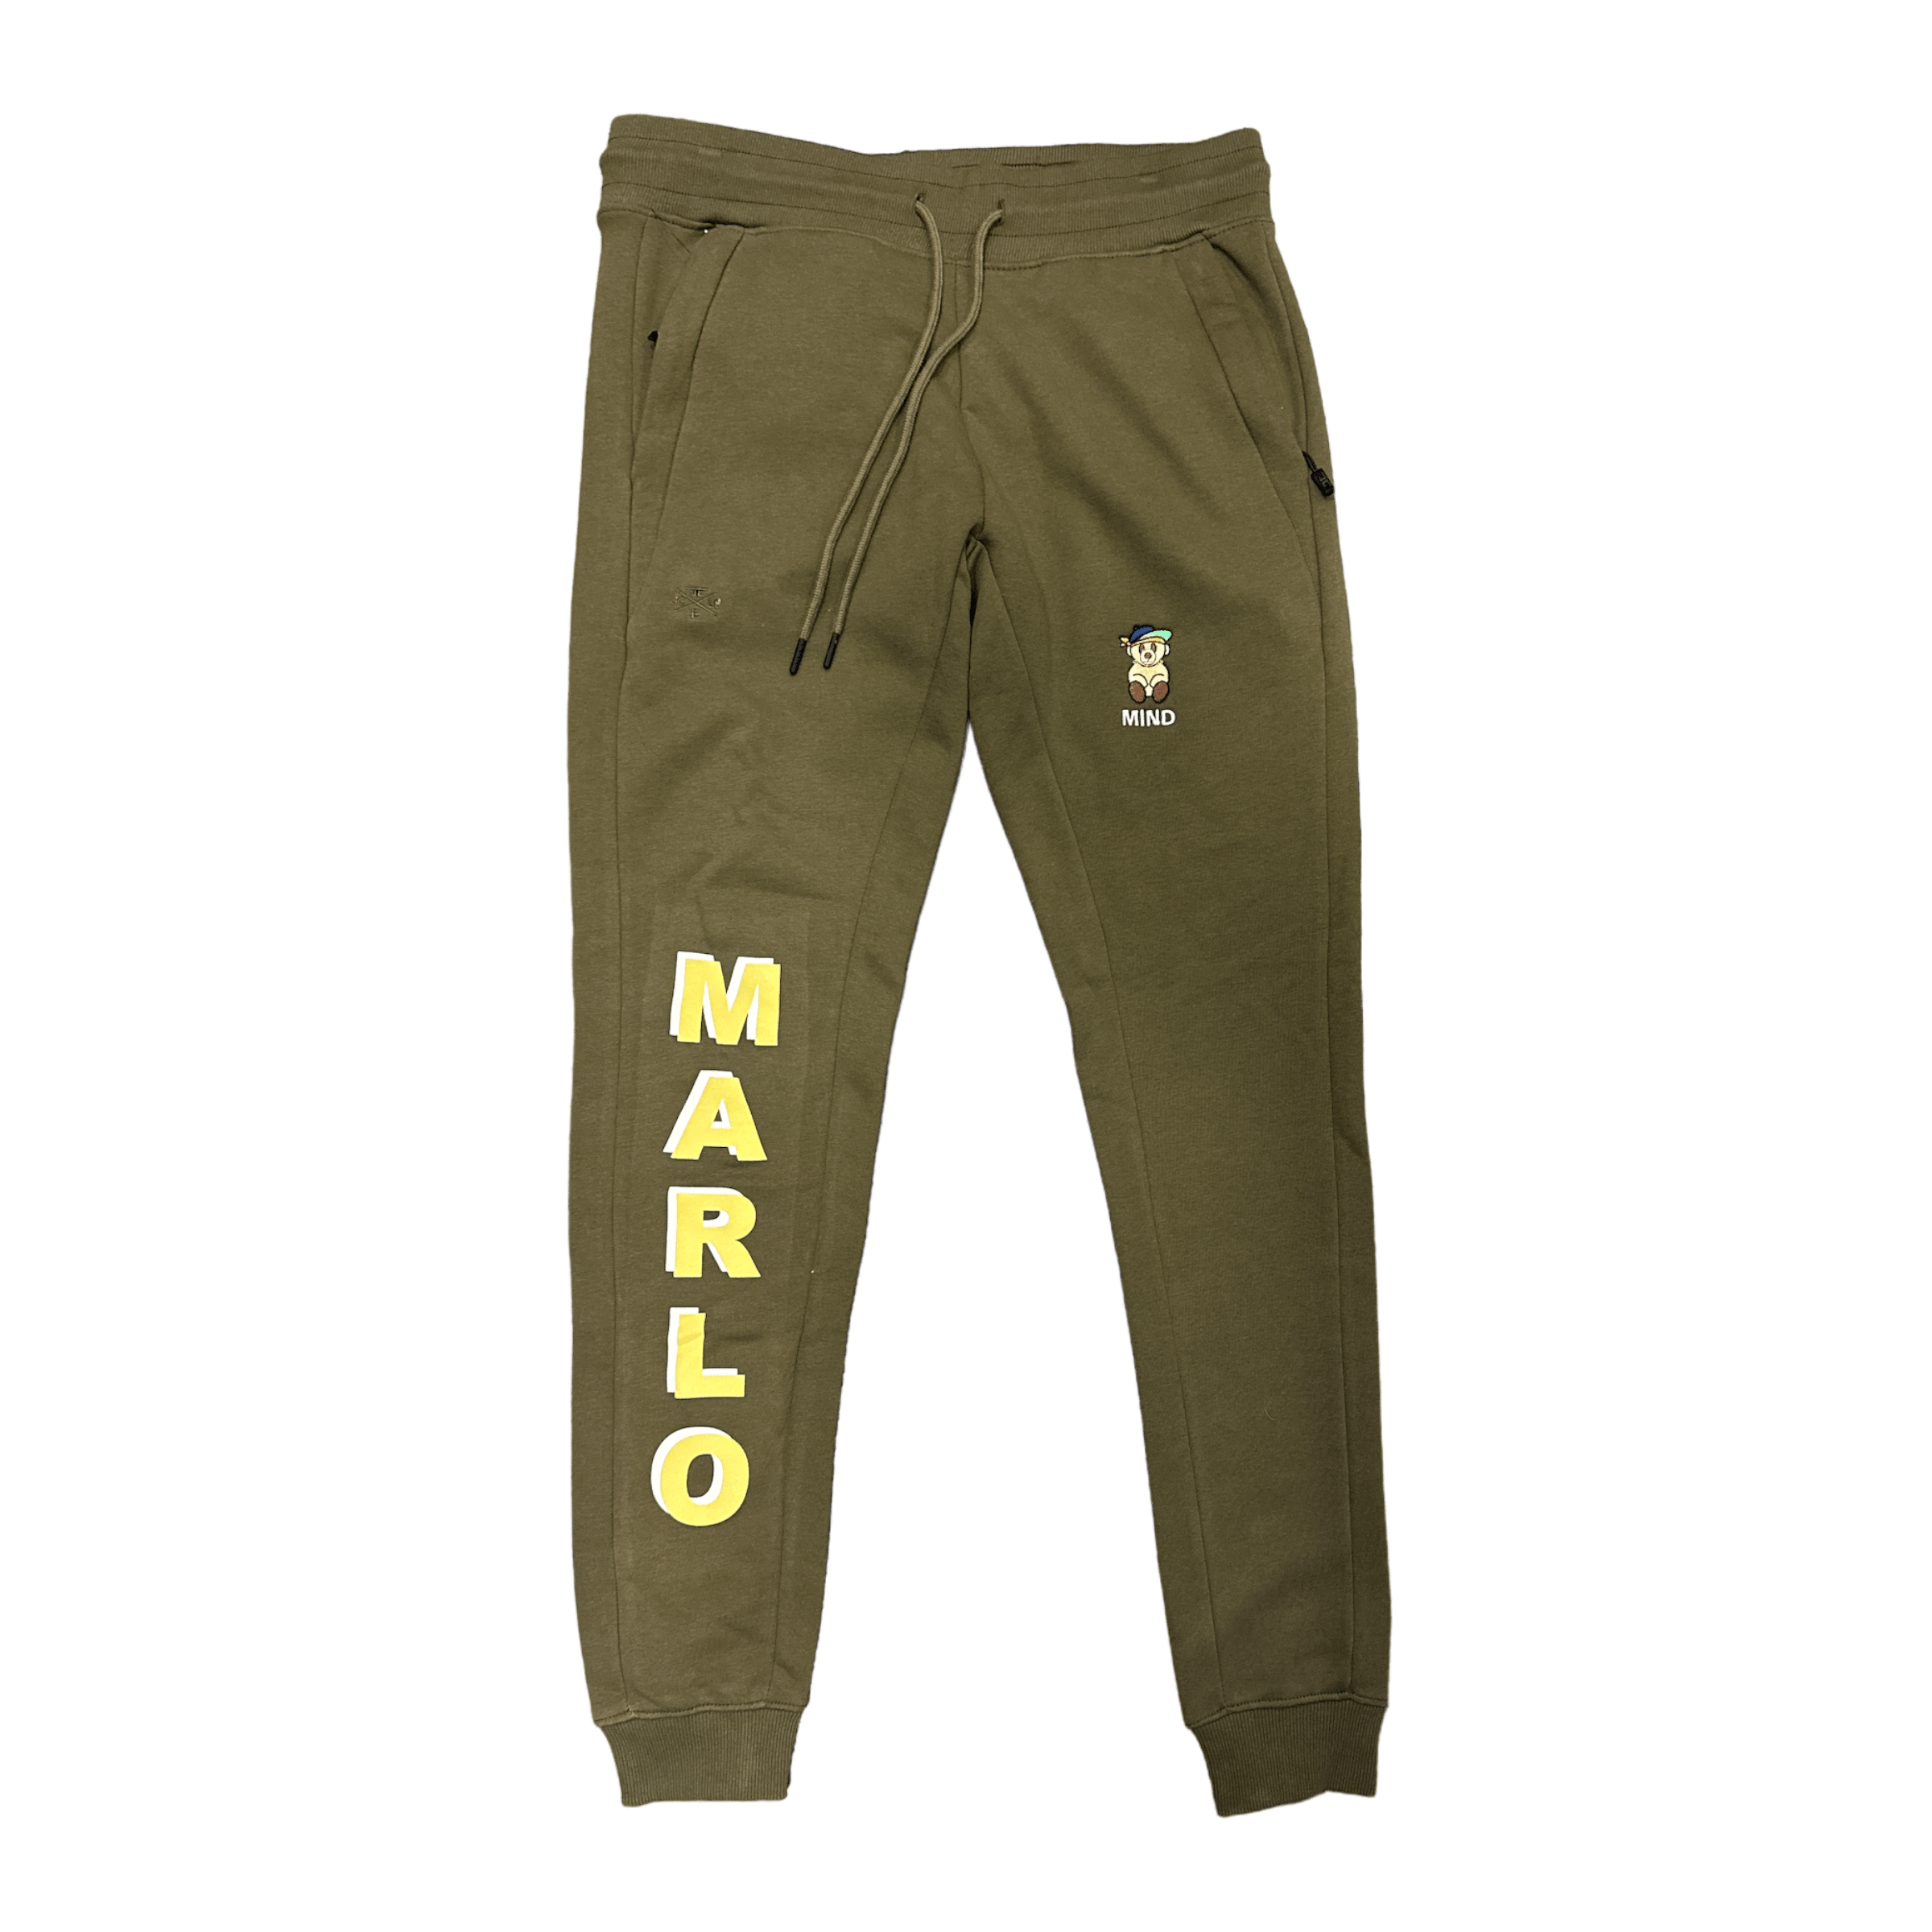 Mastermind315 Marlo olive sweatpants